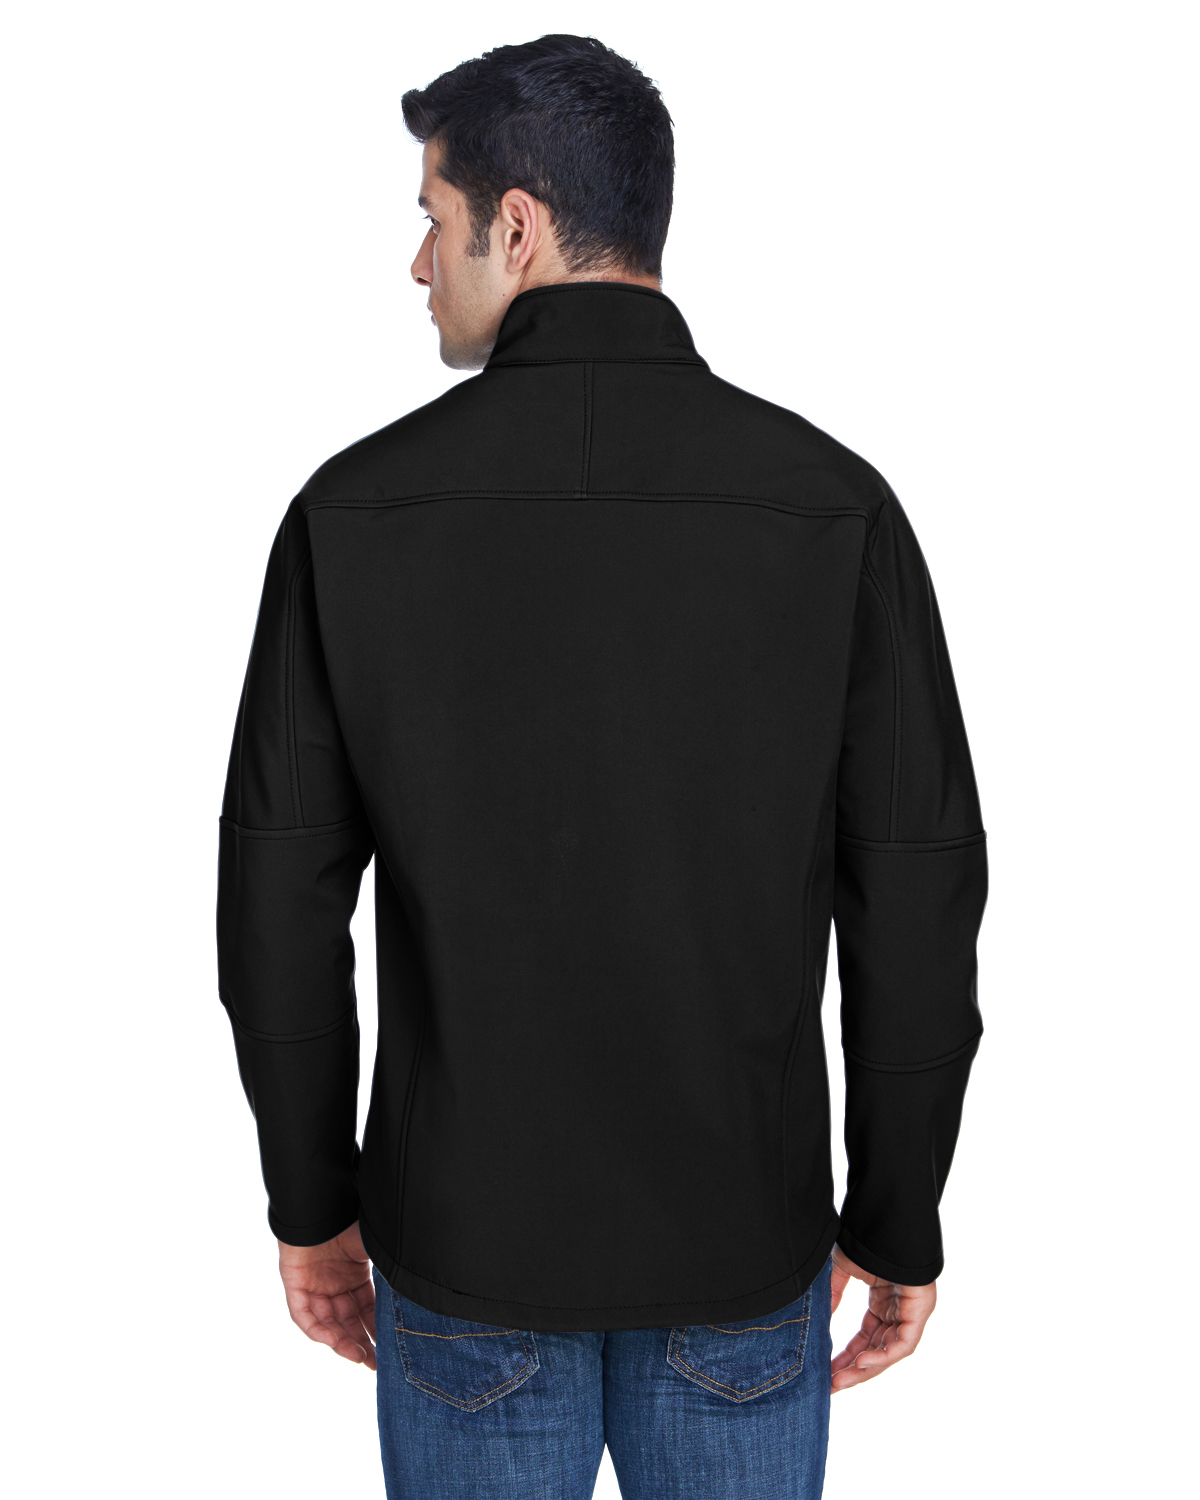 Men's Three-Layer Fleece Bonded Soft Shell Technical Jacket - BLACK - XL - image 2 of 3